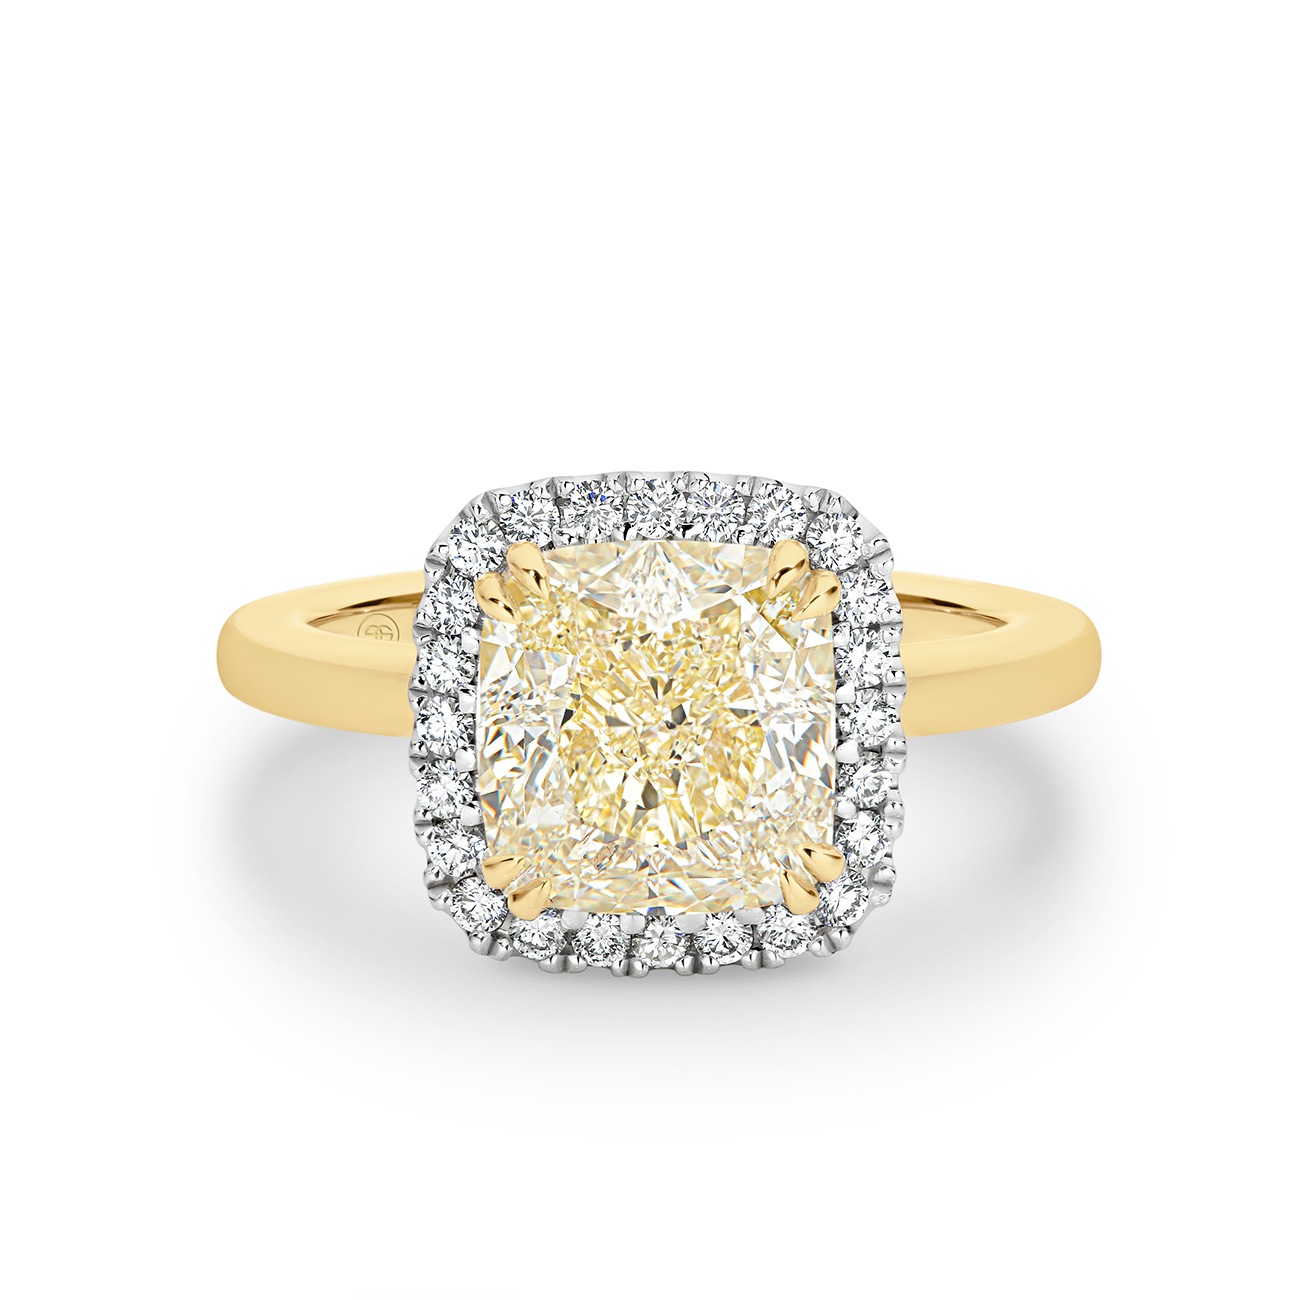 Cushion Cut Halo Yellow Diamond Engagement Ring